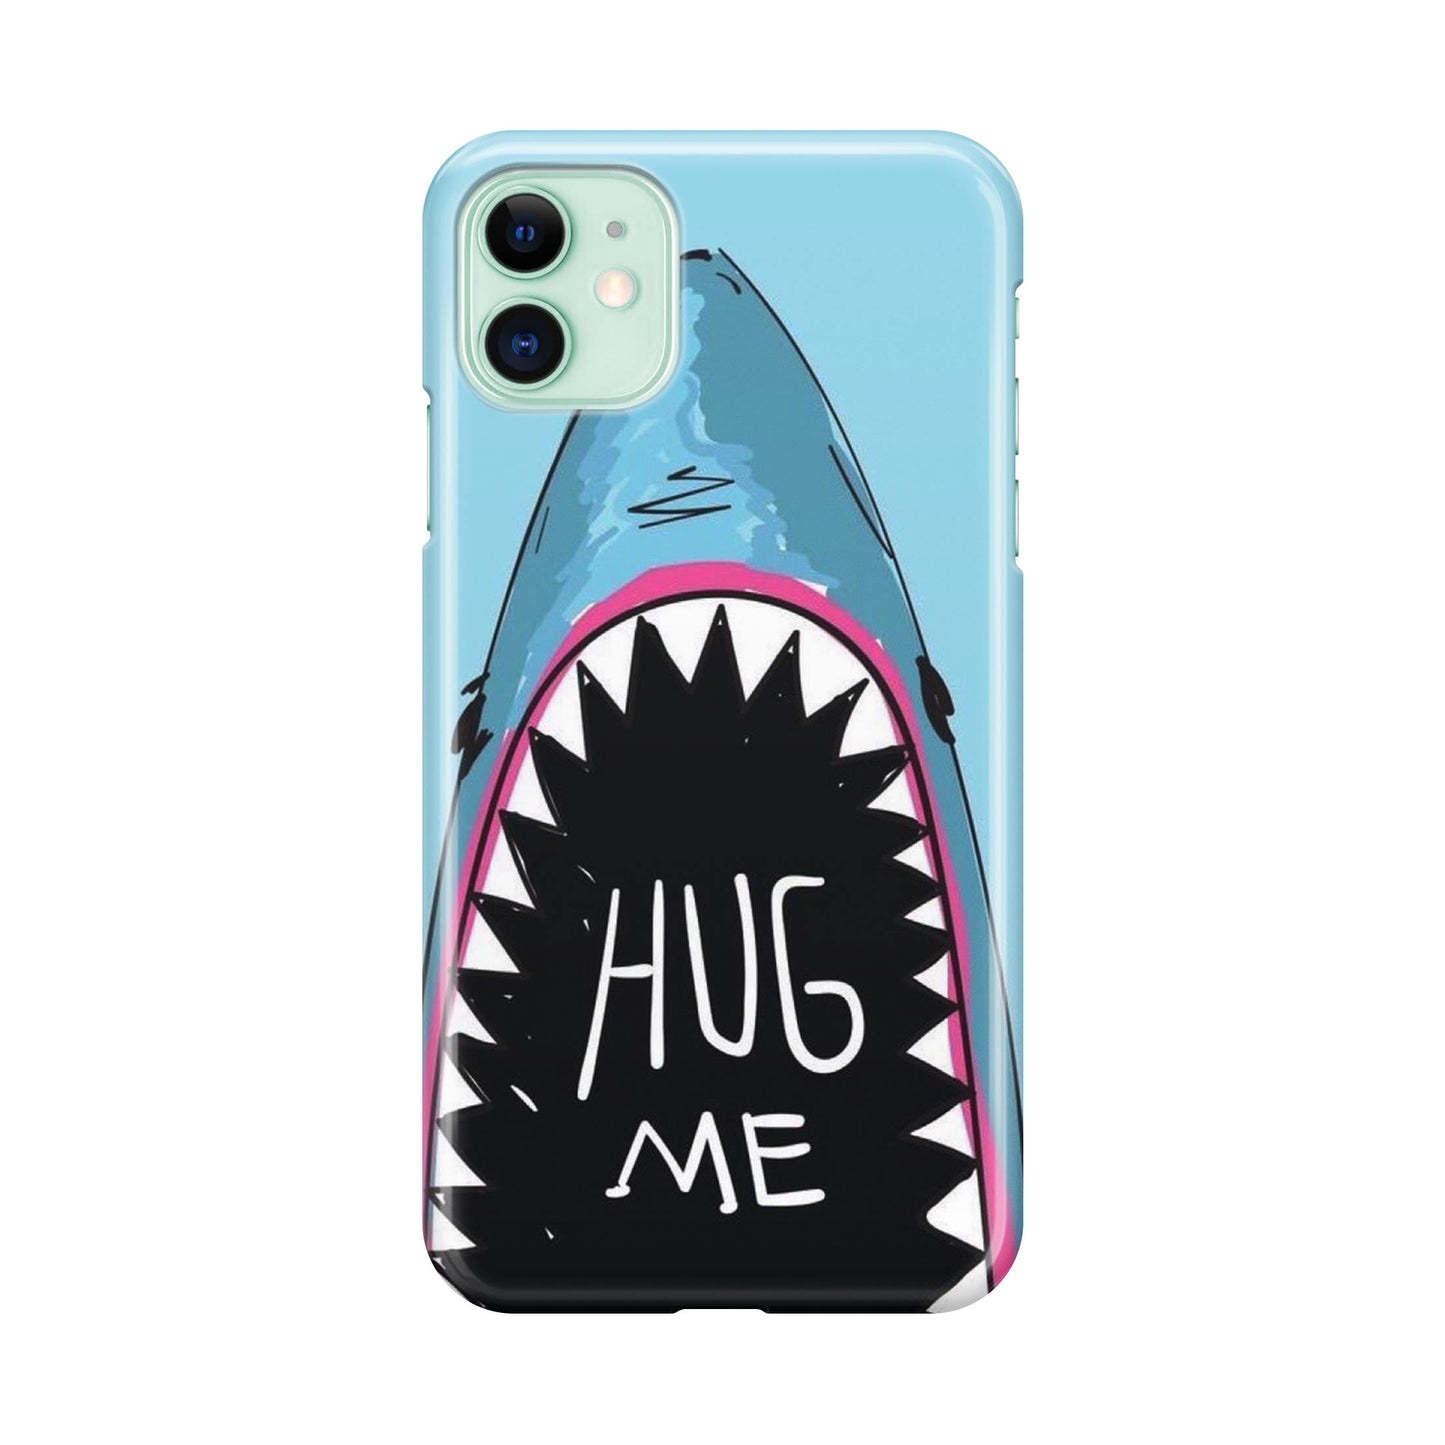 Hug Me iPhone 12 Case